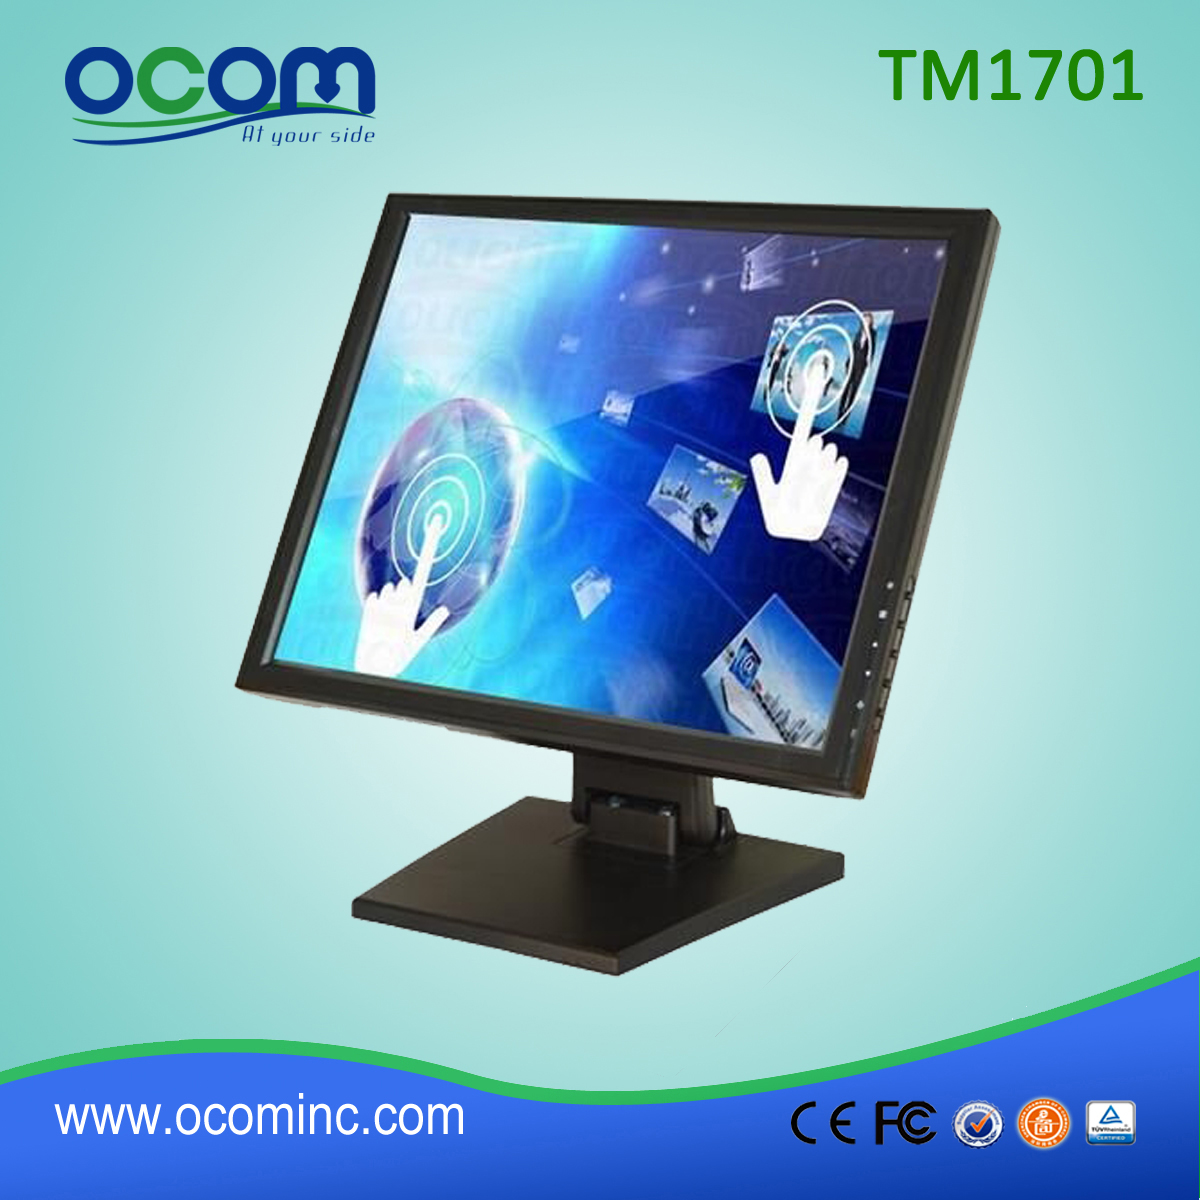 TM1701 Chiny Ekran dotykowy automat pulpit monitora